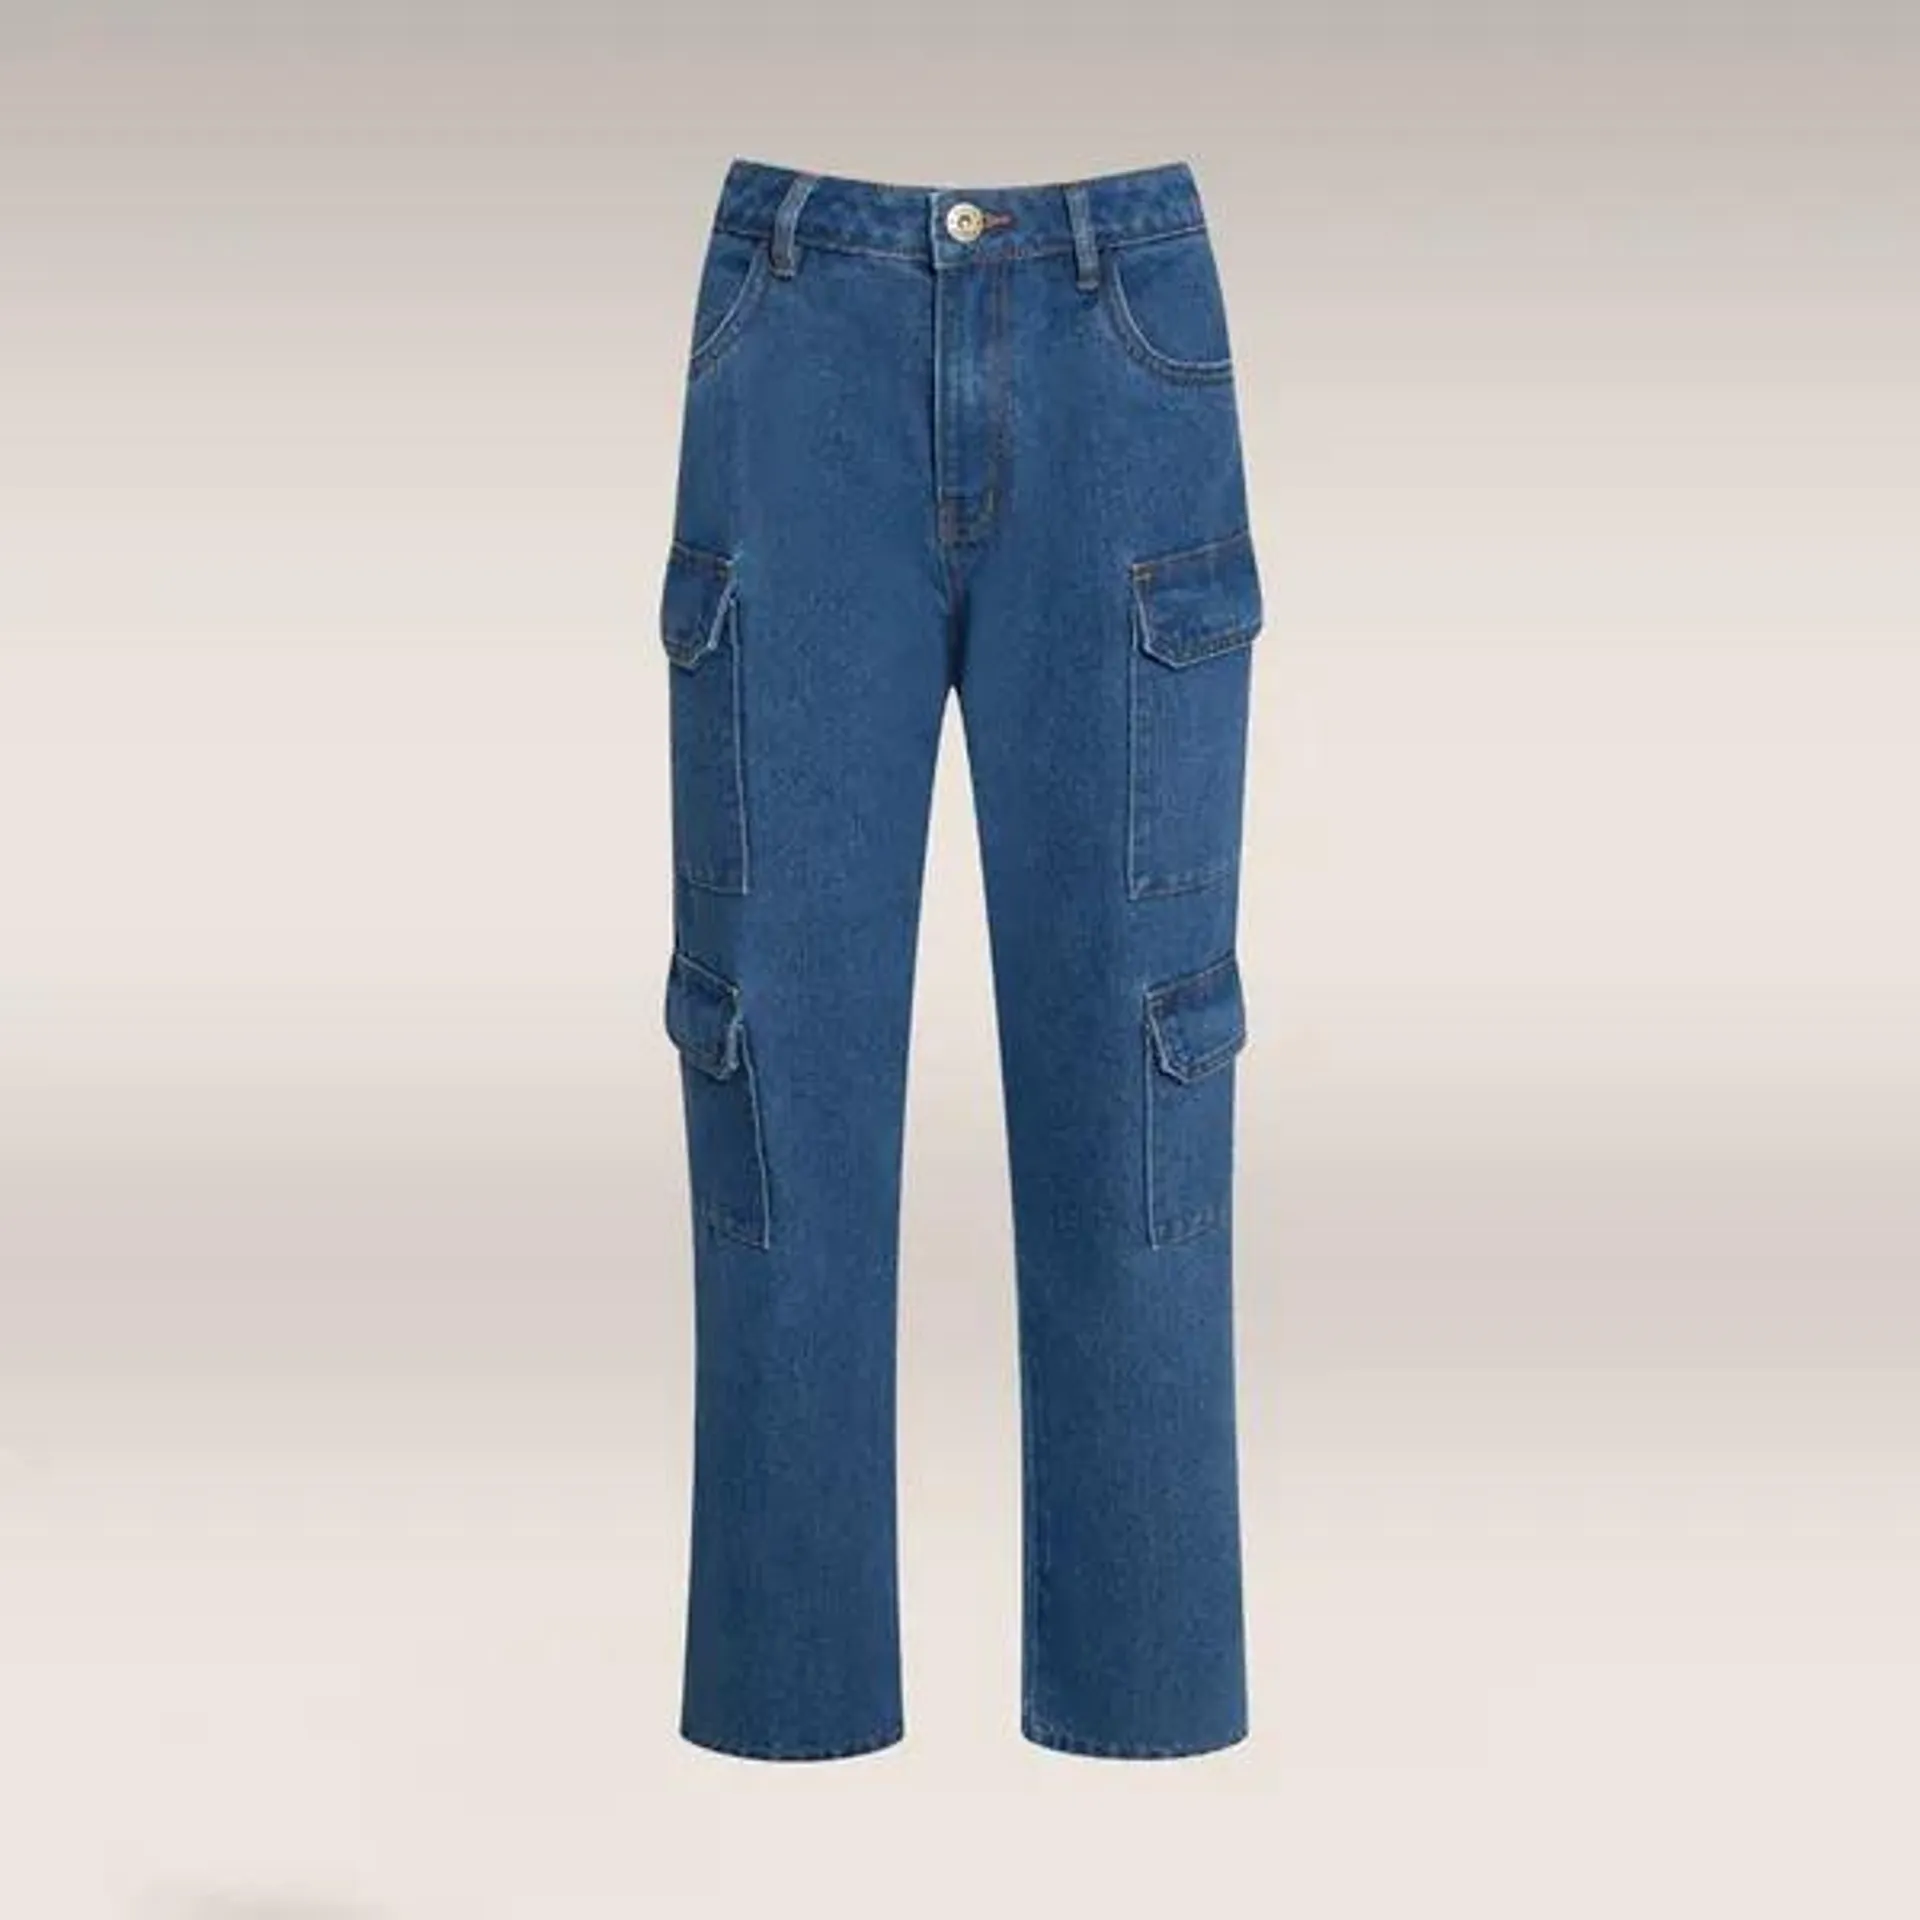 Utility wide leg denim jeans blue